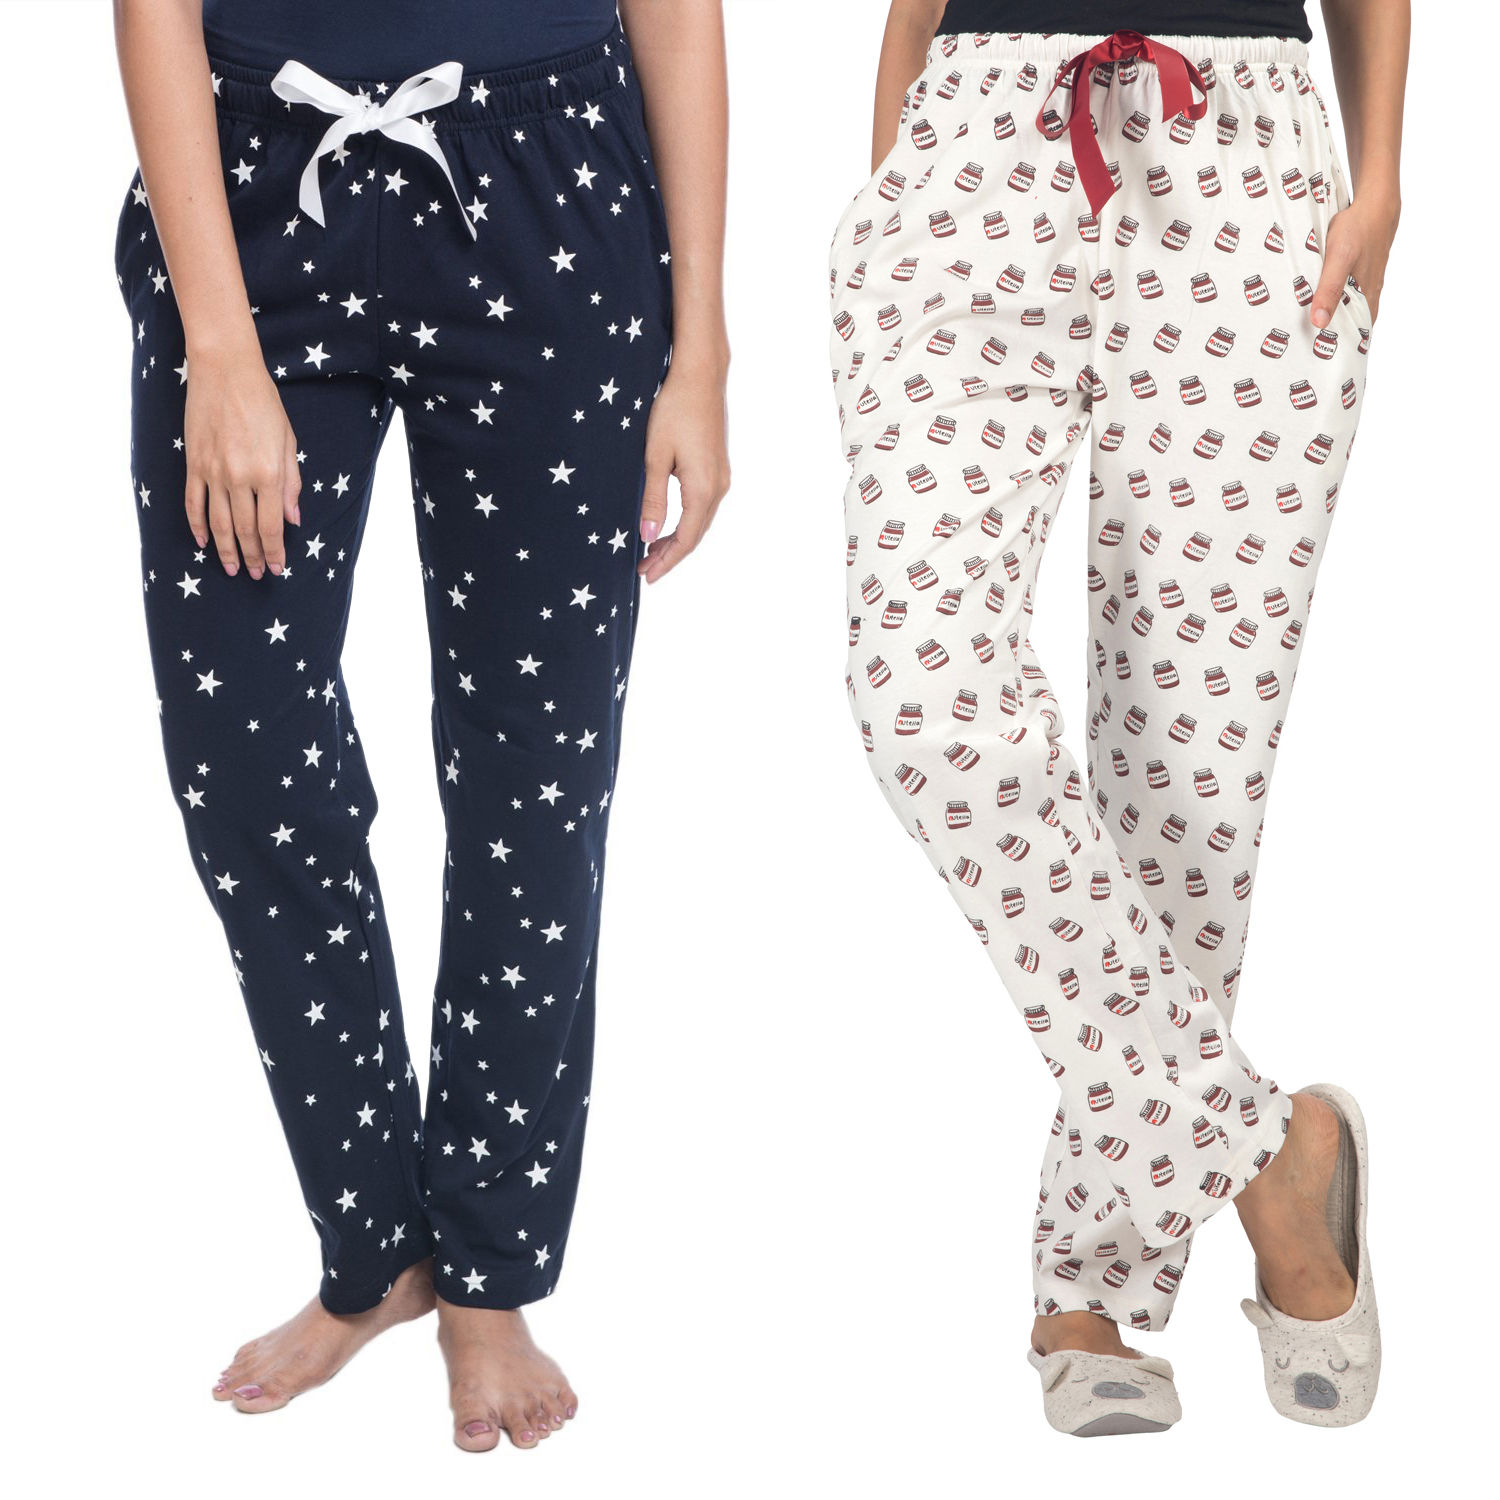 Buy Nightwear for Women Online  Online Shop The Chennai Silks